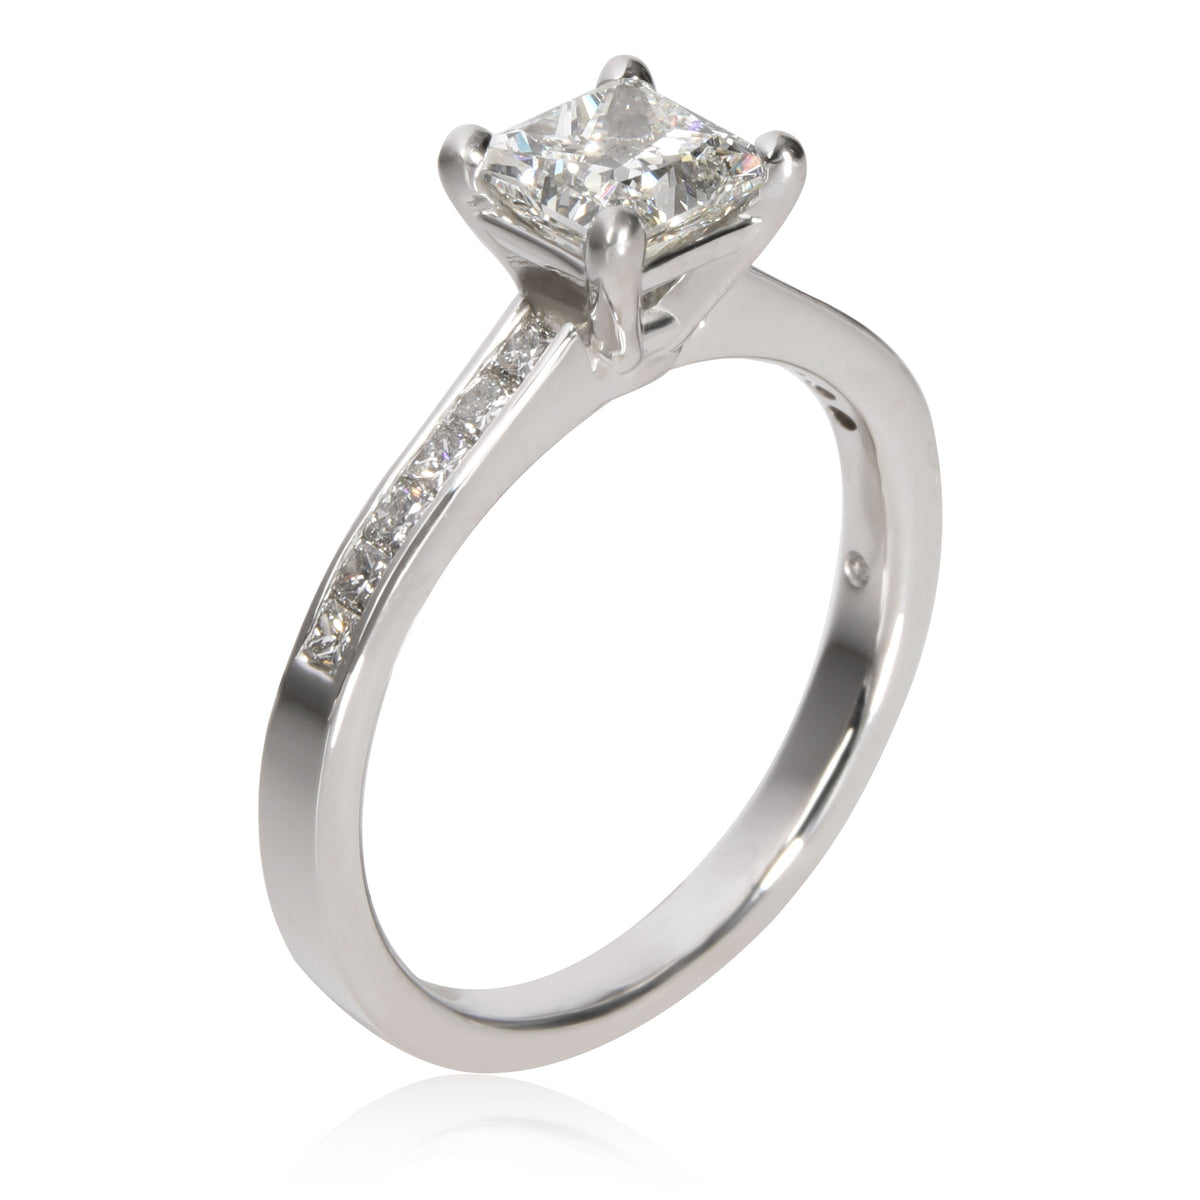 Blue Nile Princess Diamond Engagement Ring in 14K White Gold H VS2 1.20 CTW